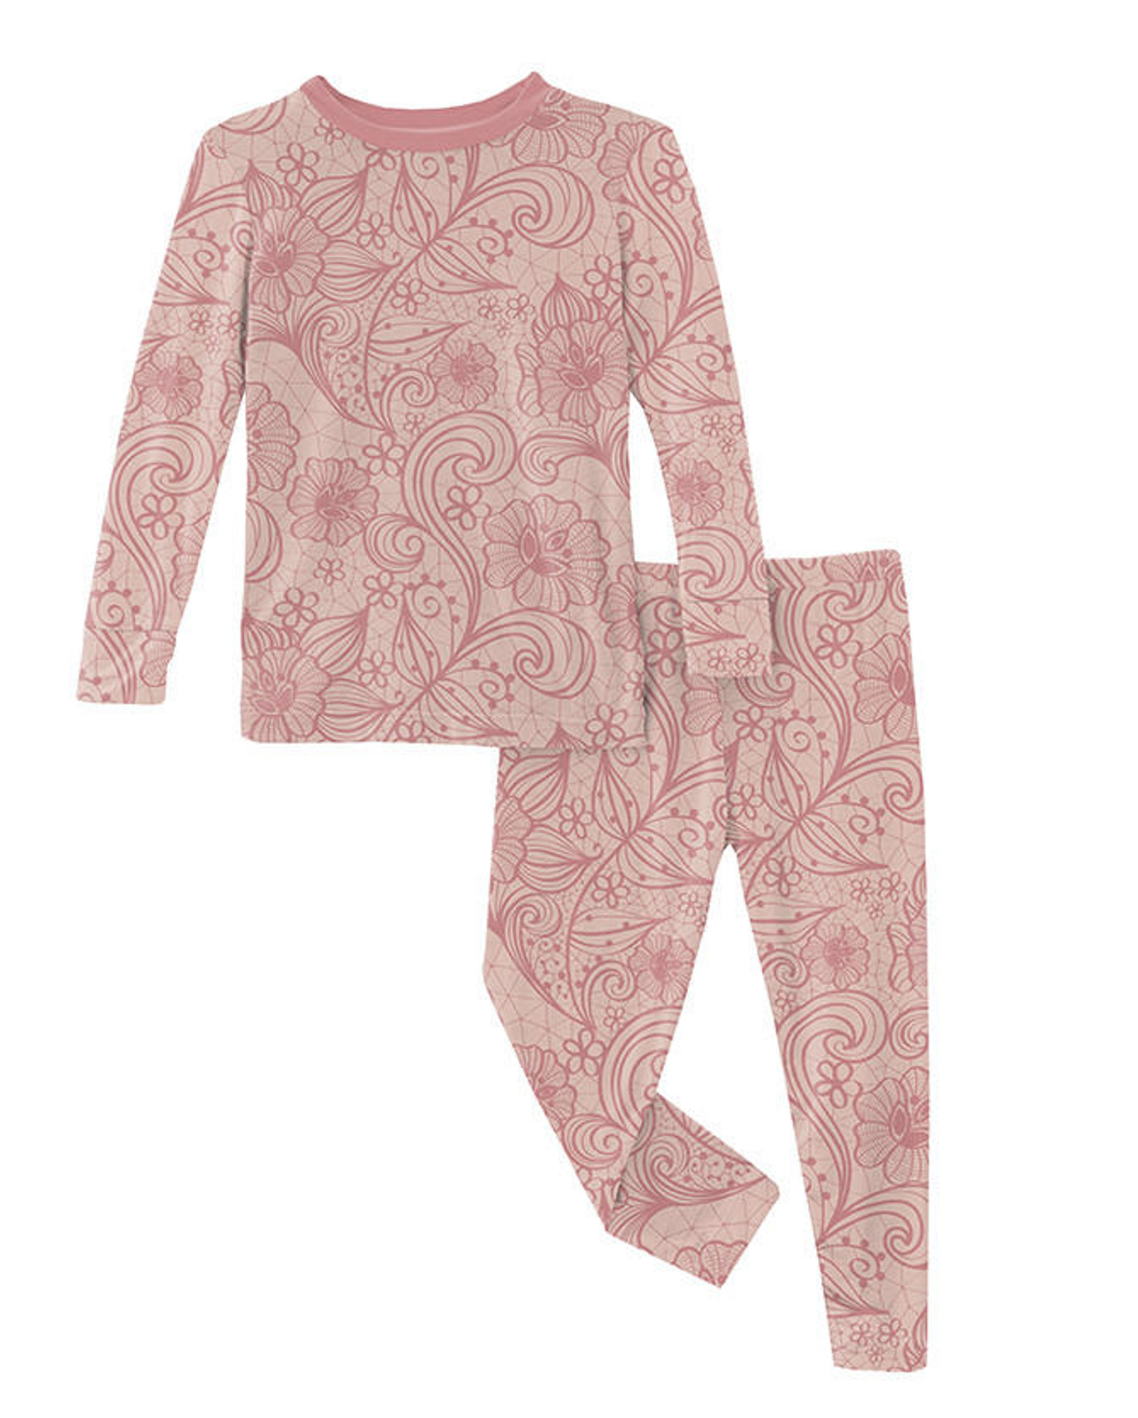 Kickee Decades Collection- Print Long Sleeve Pajama Set- Peach Blossom Lace